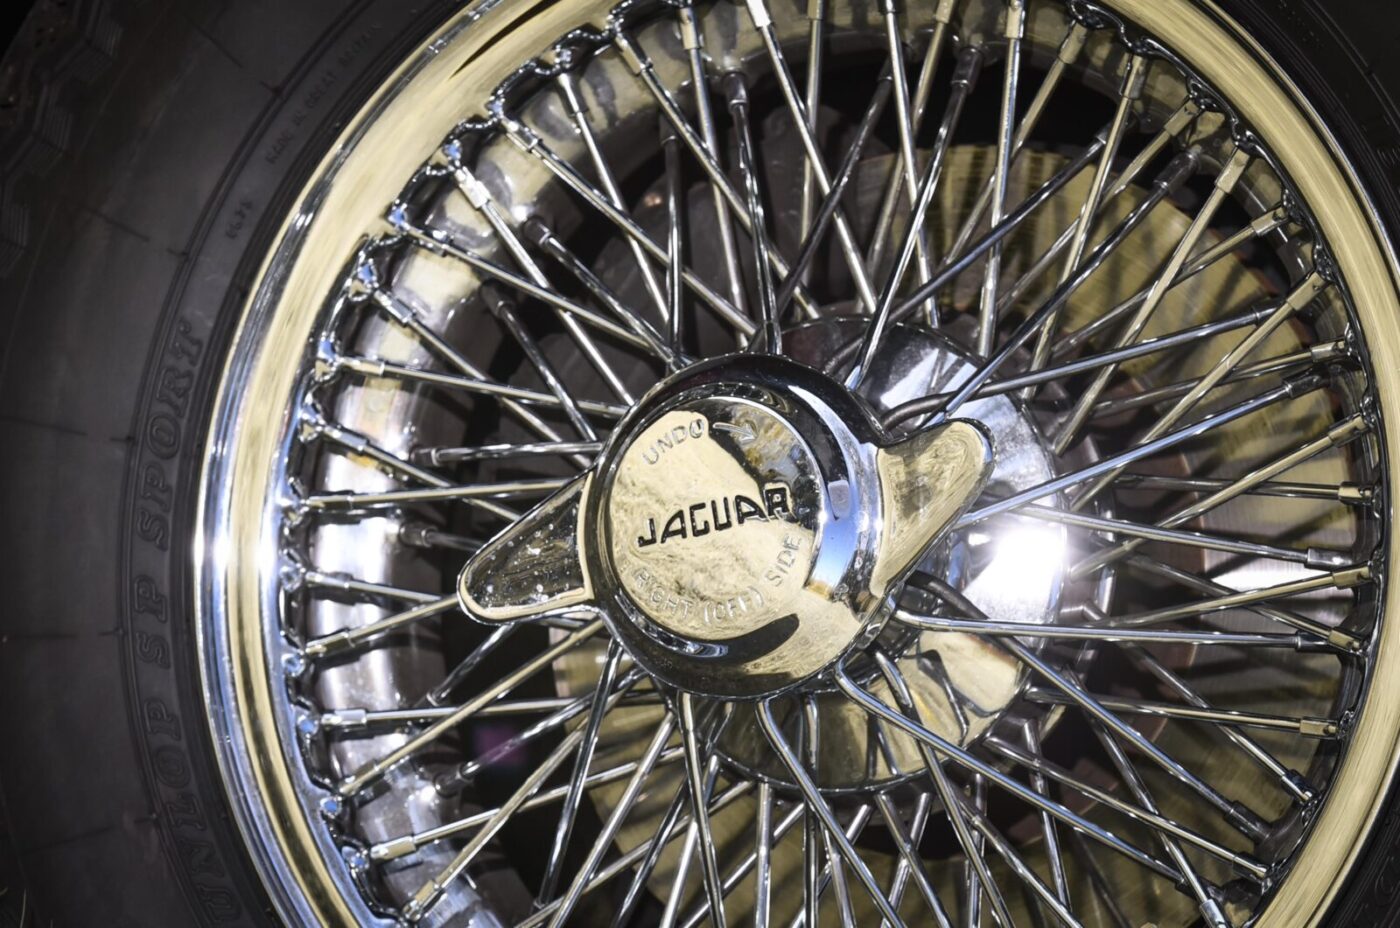 Jaguar E-Type wheel